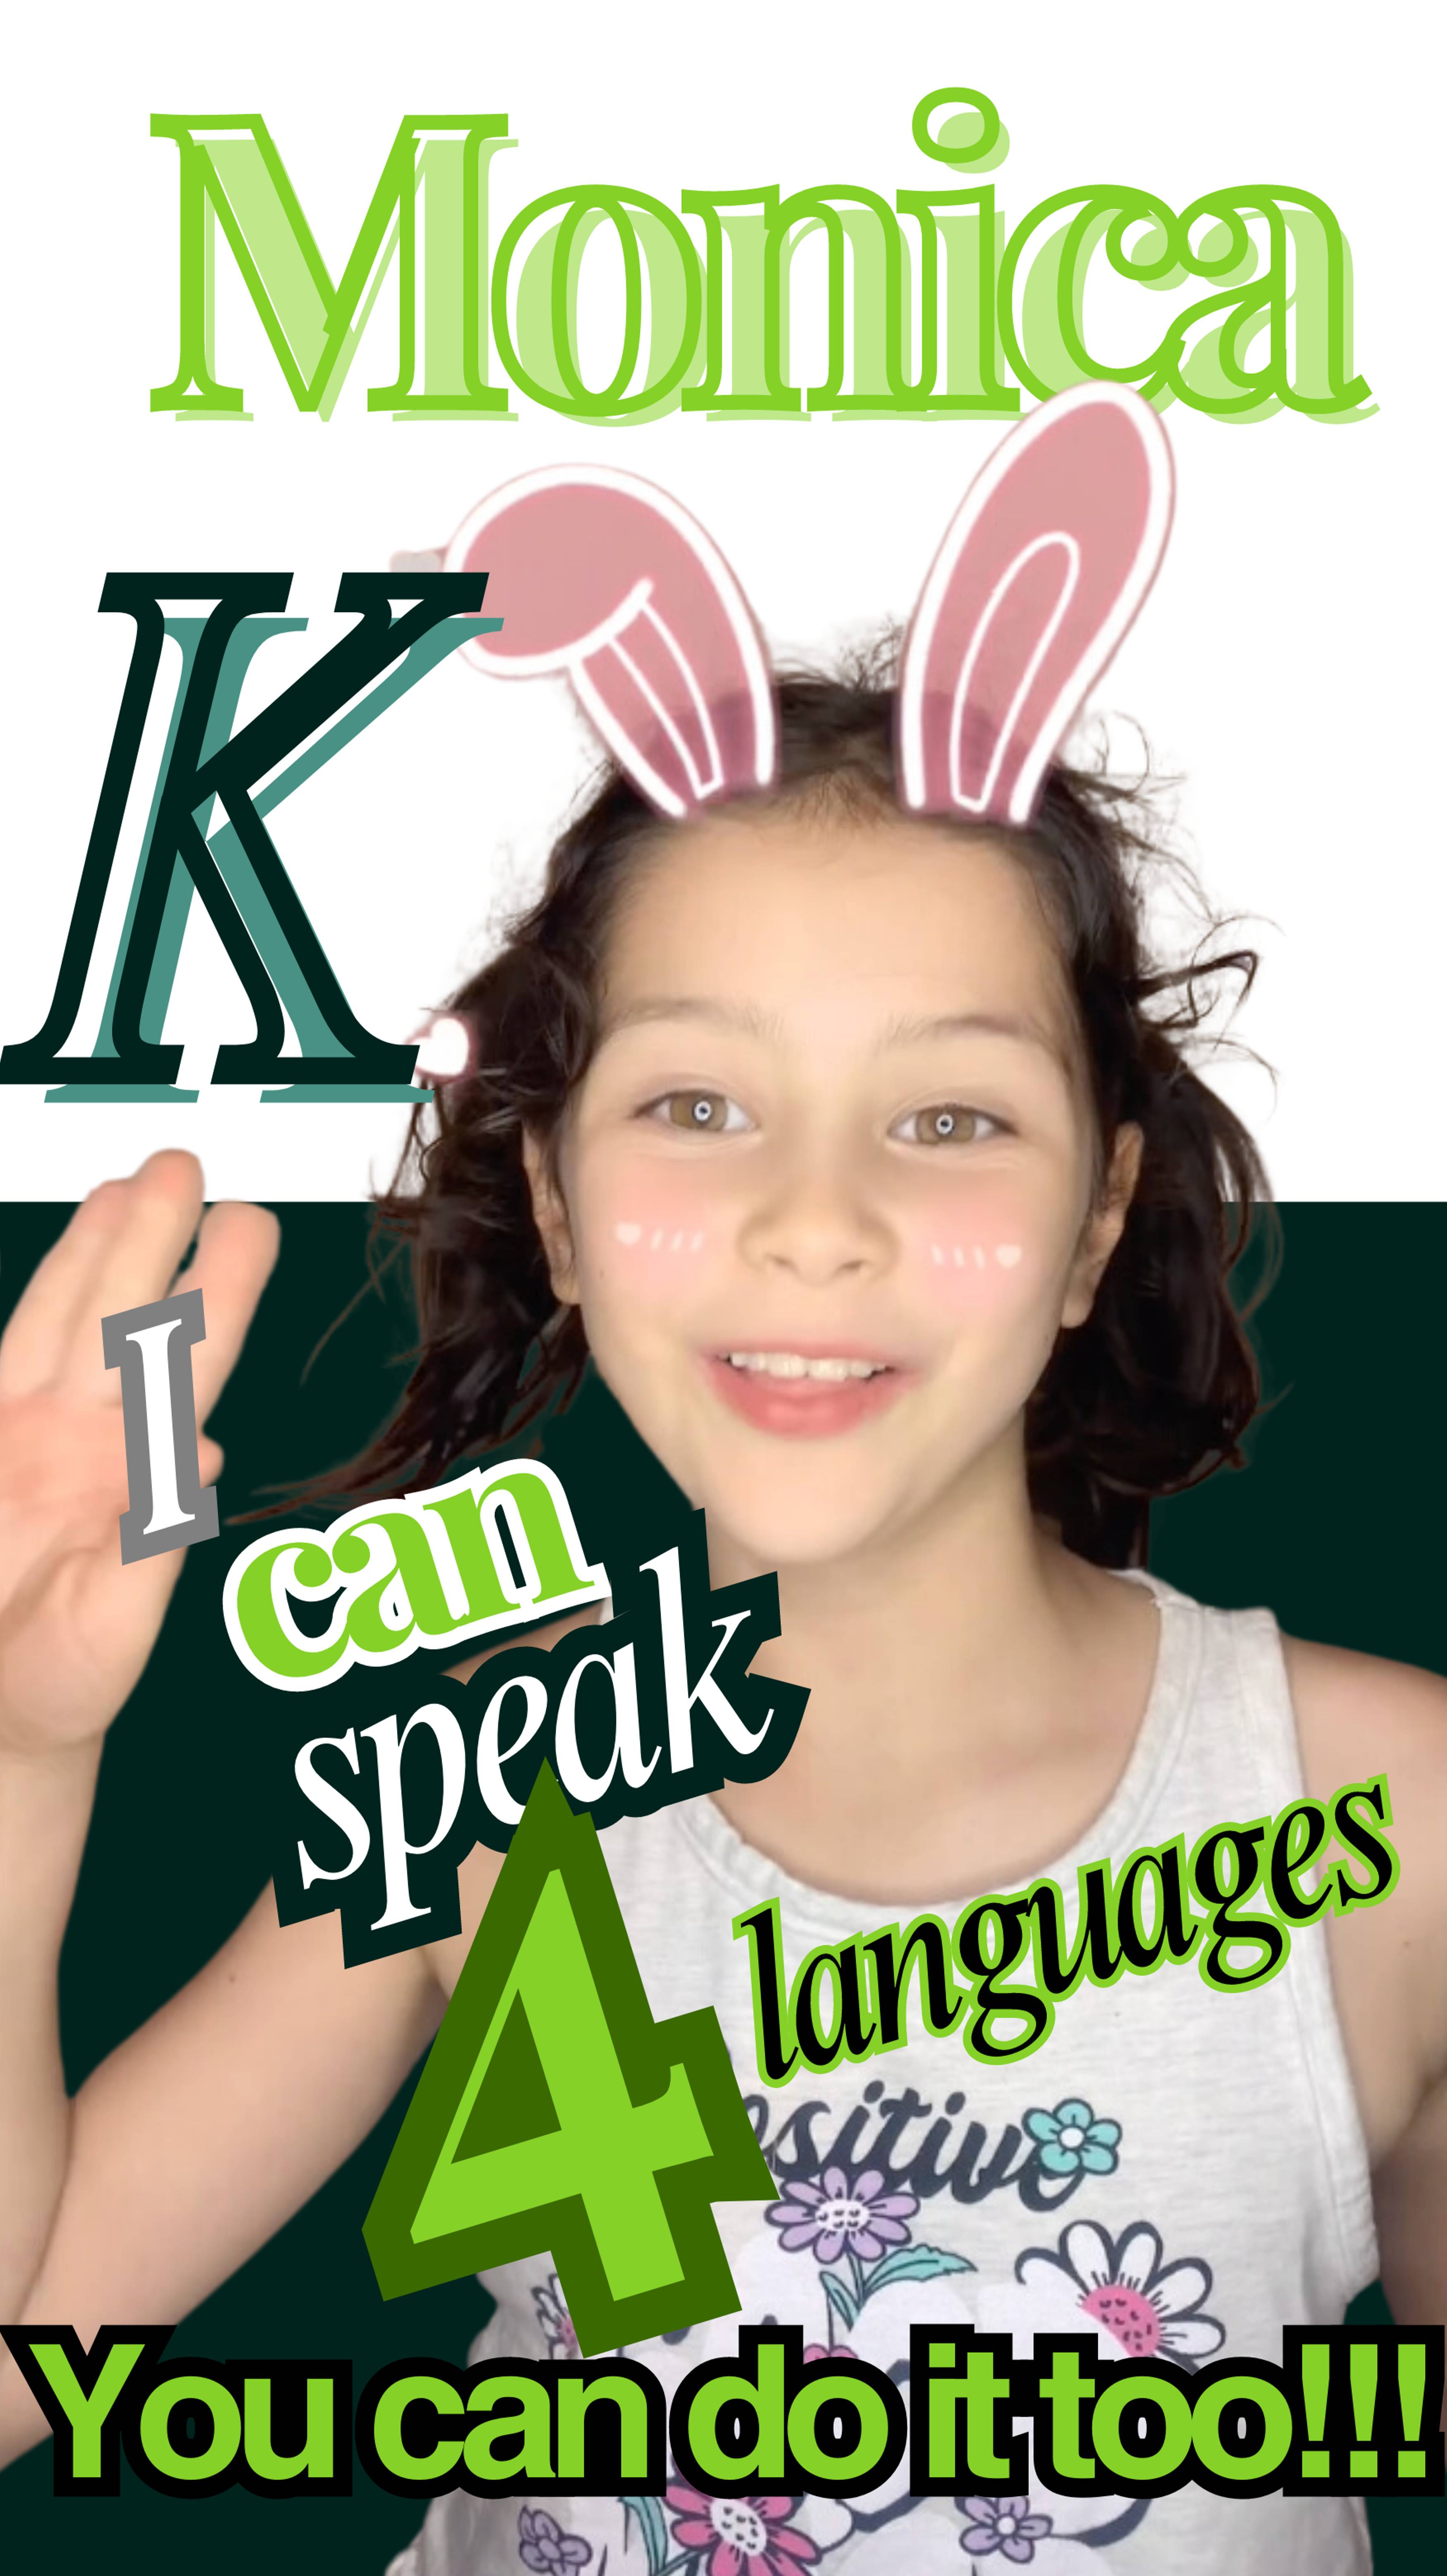 FourLingual_Monica - I can speak 4 languages